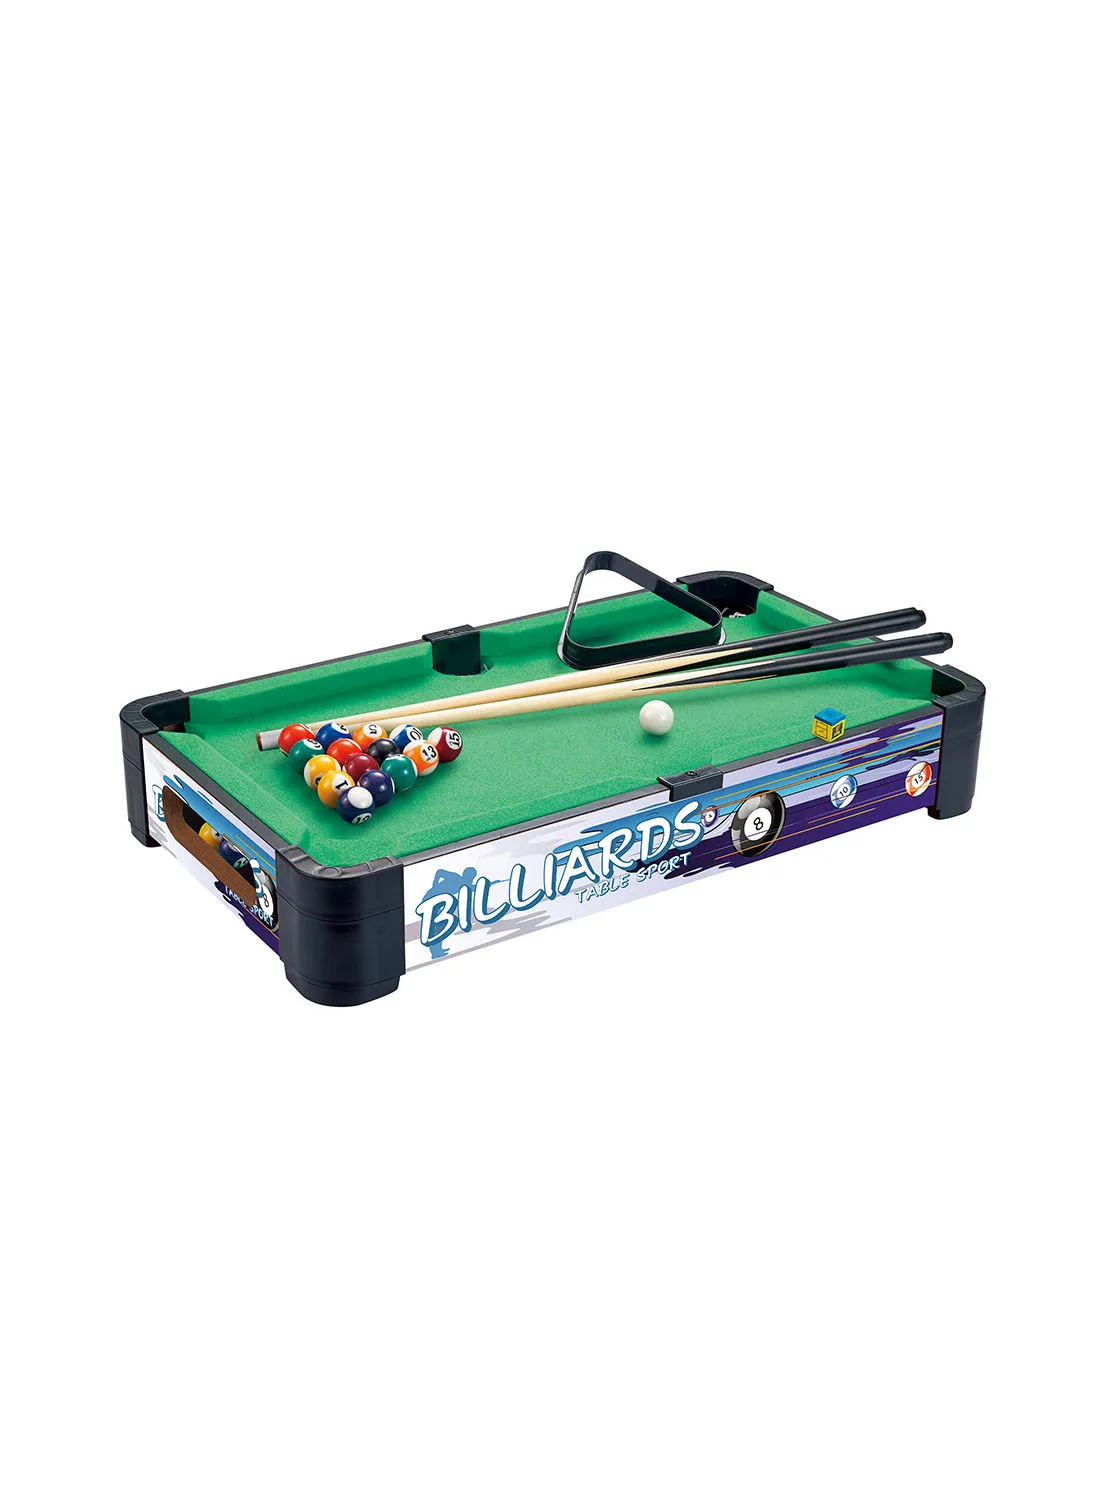 XIANGJUN Billiards Pool Table Game Set 48 x 27 x 8.7cm